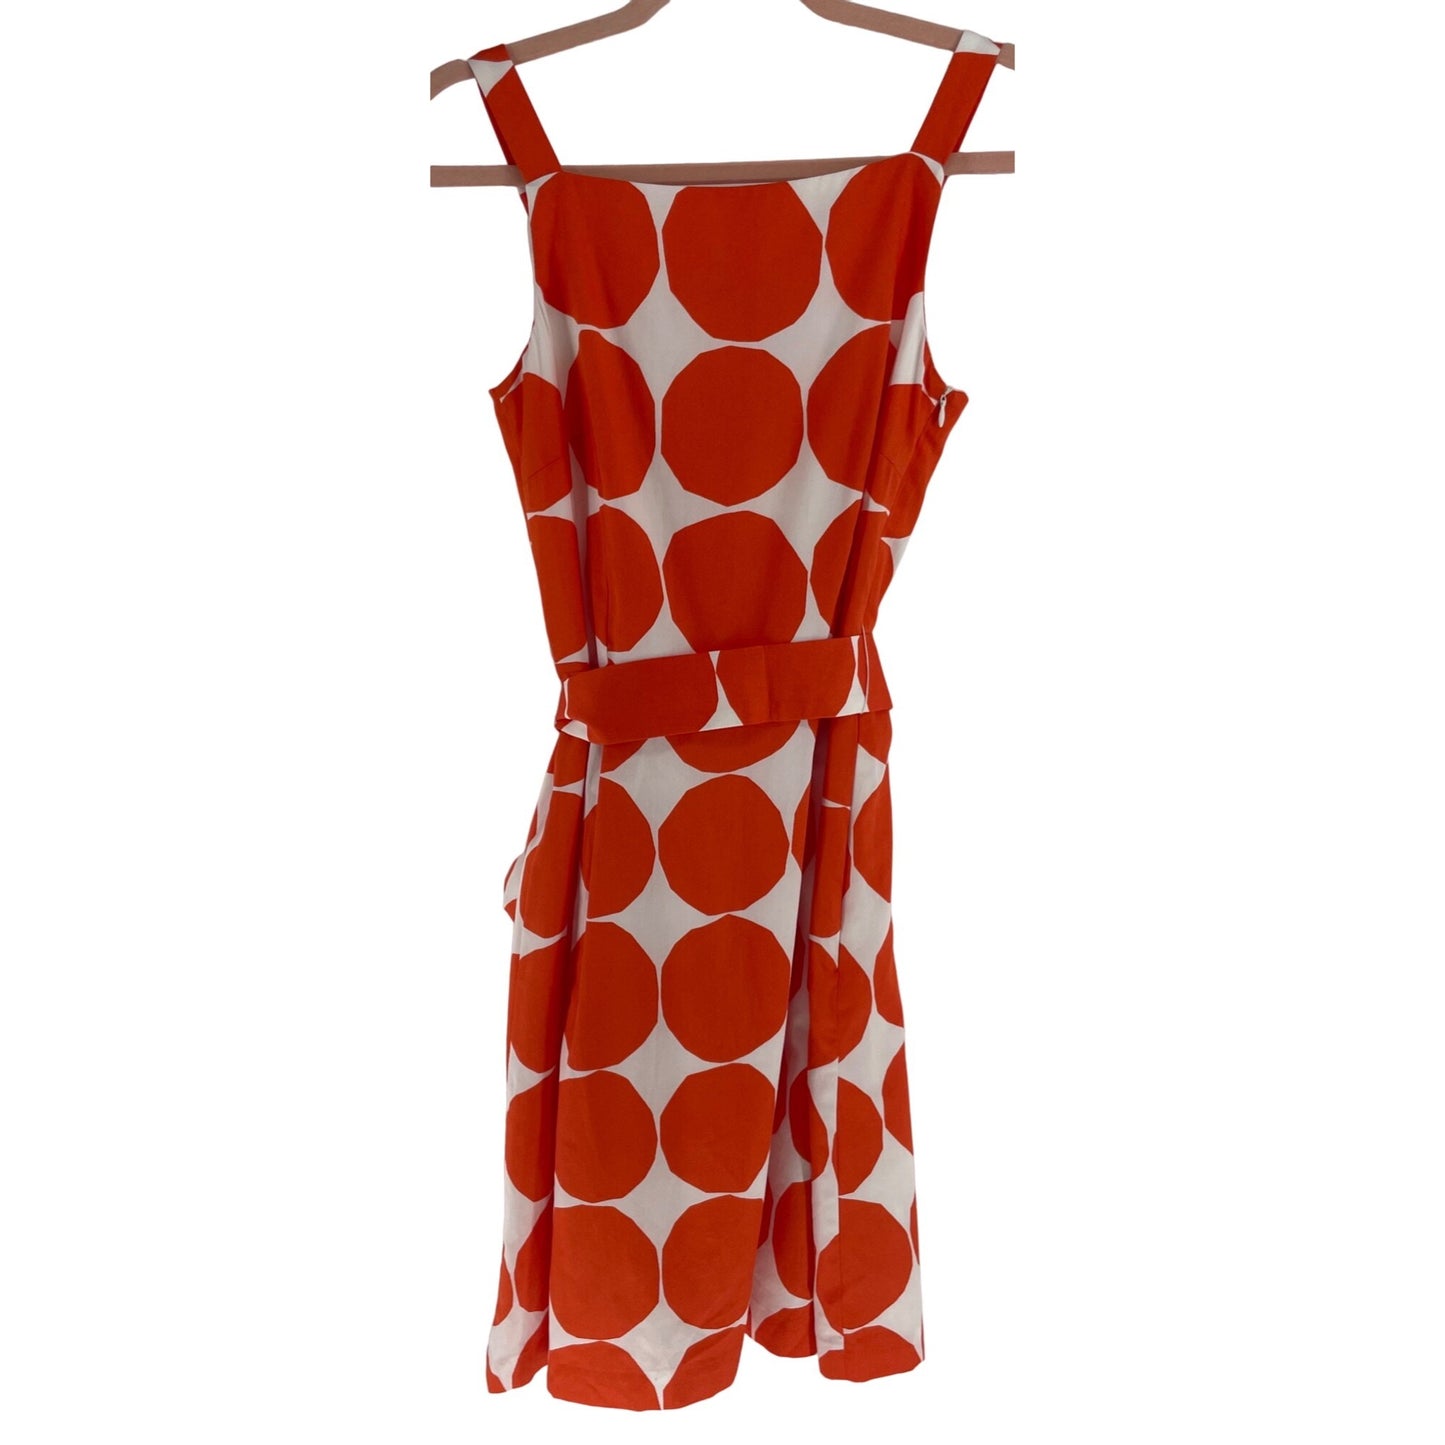 NWOT Marimekko Women's Size 34 (XS) Orange & White Sleeveless Polka Dot Dress